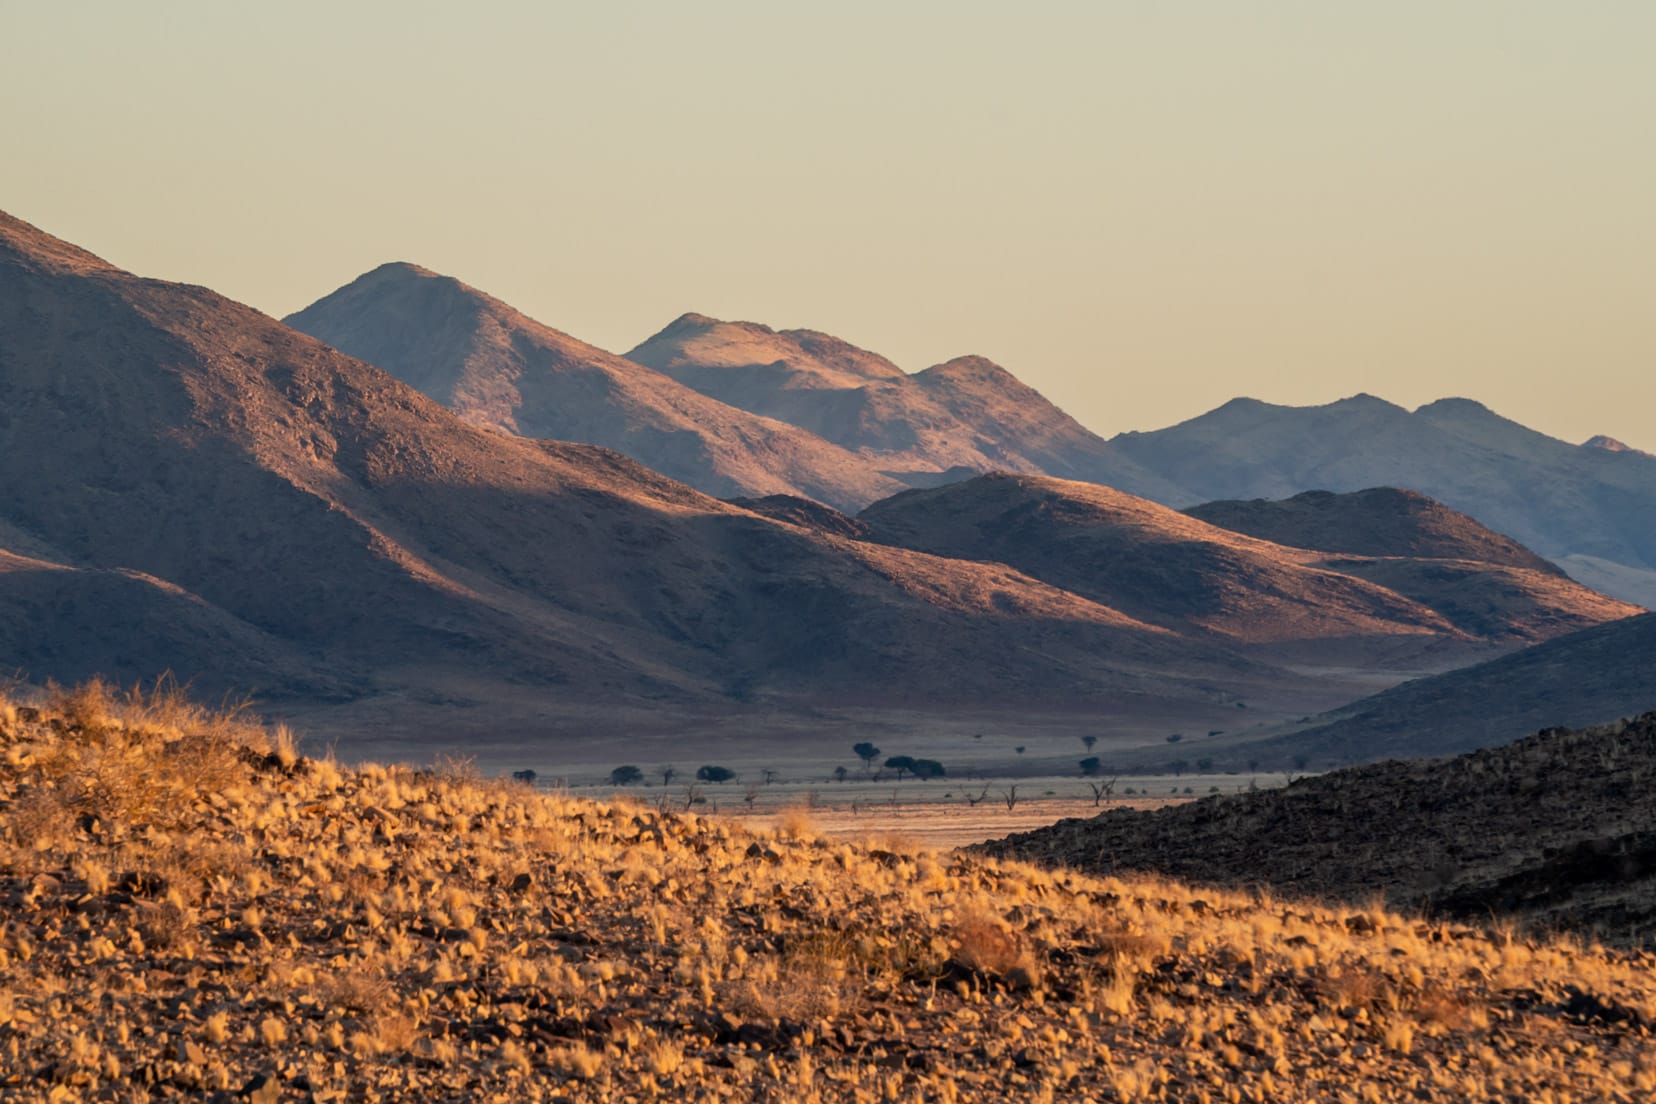 sunrise shot of mountains and desert plain at Kanaan Desert retreat